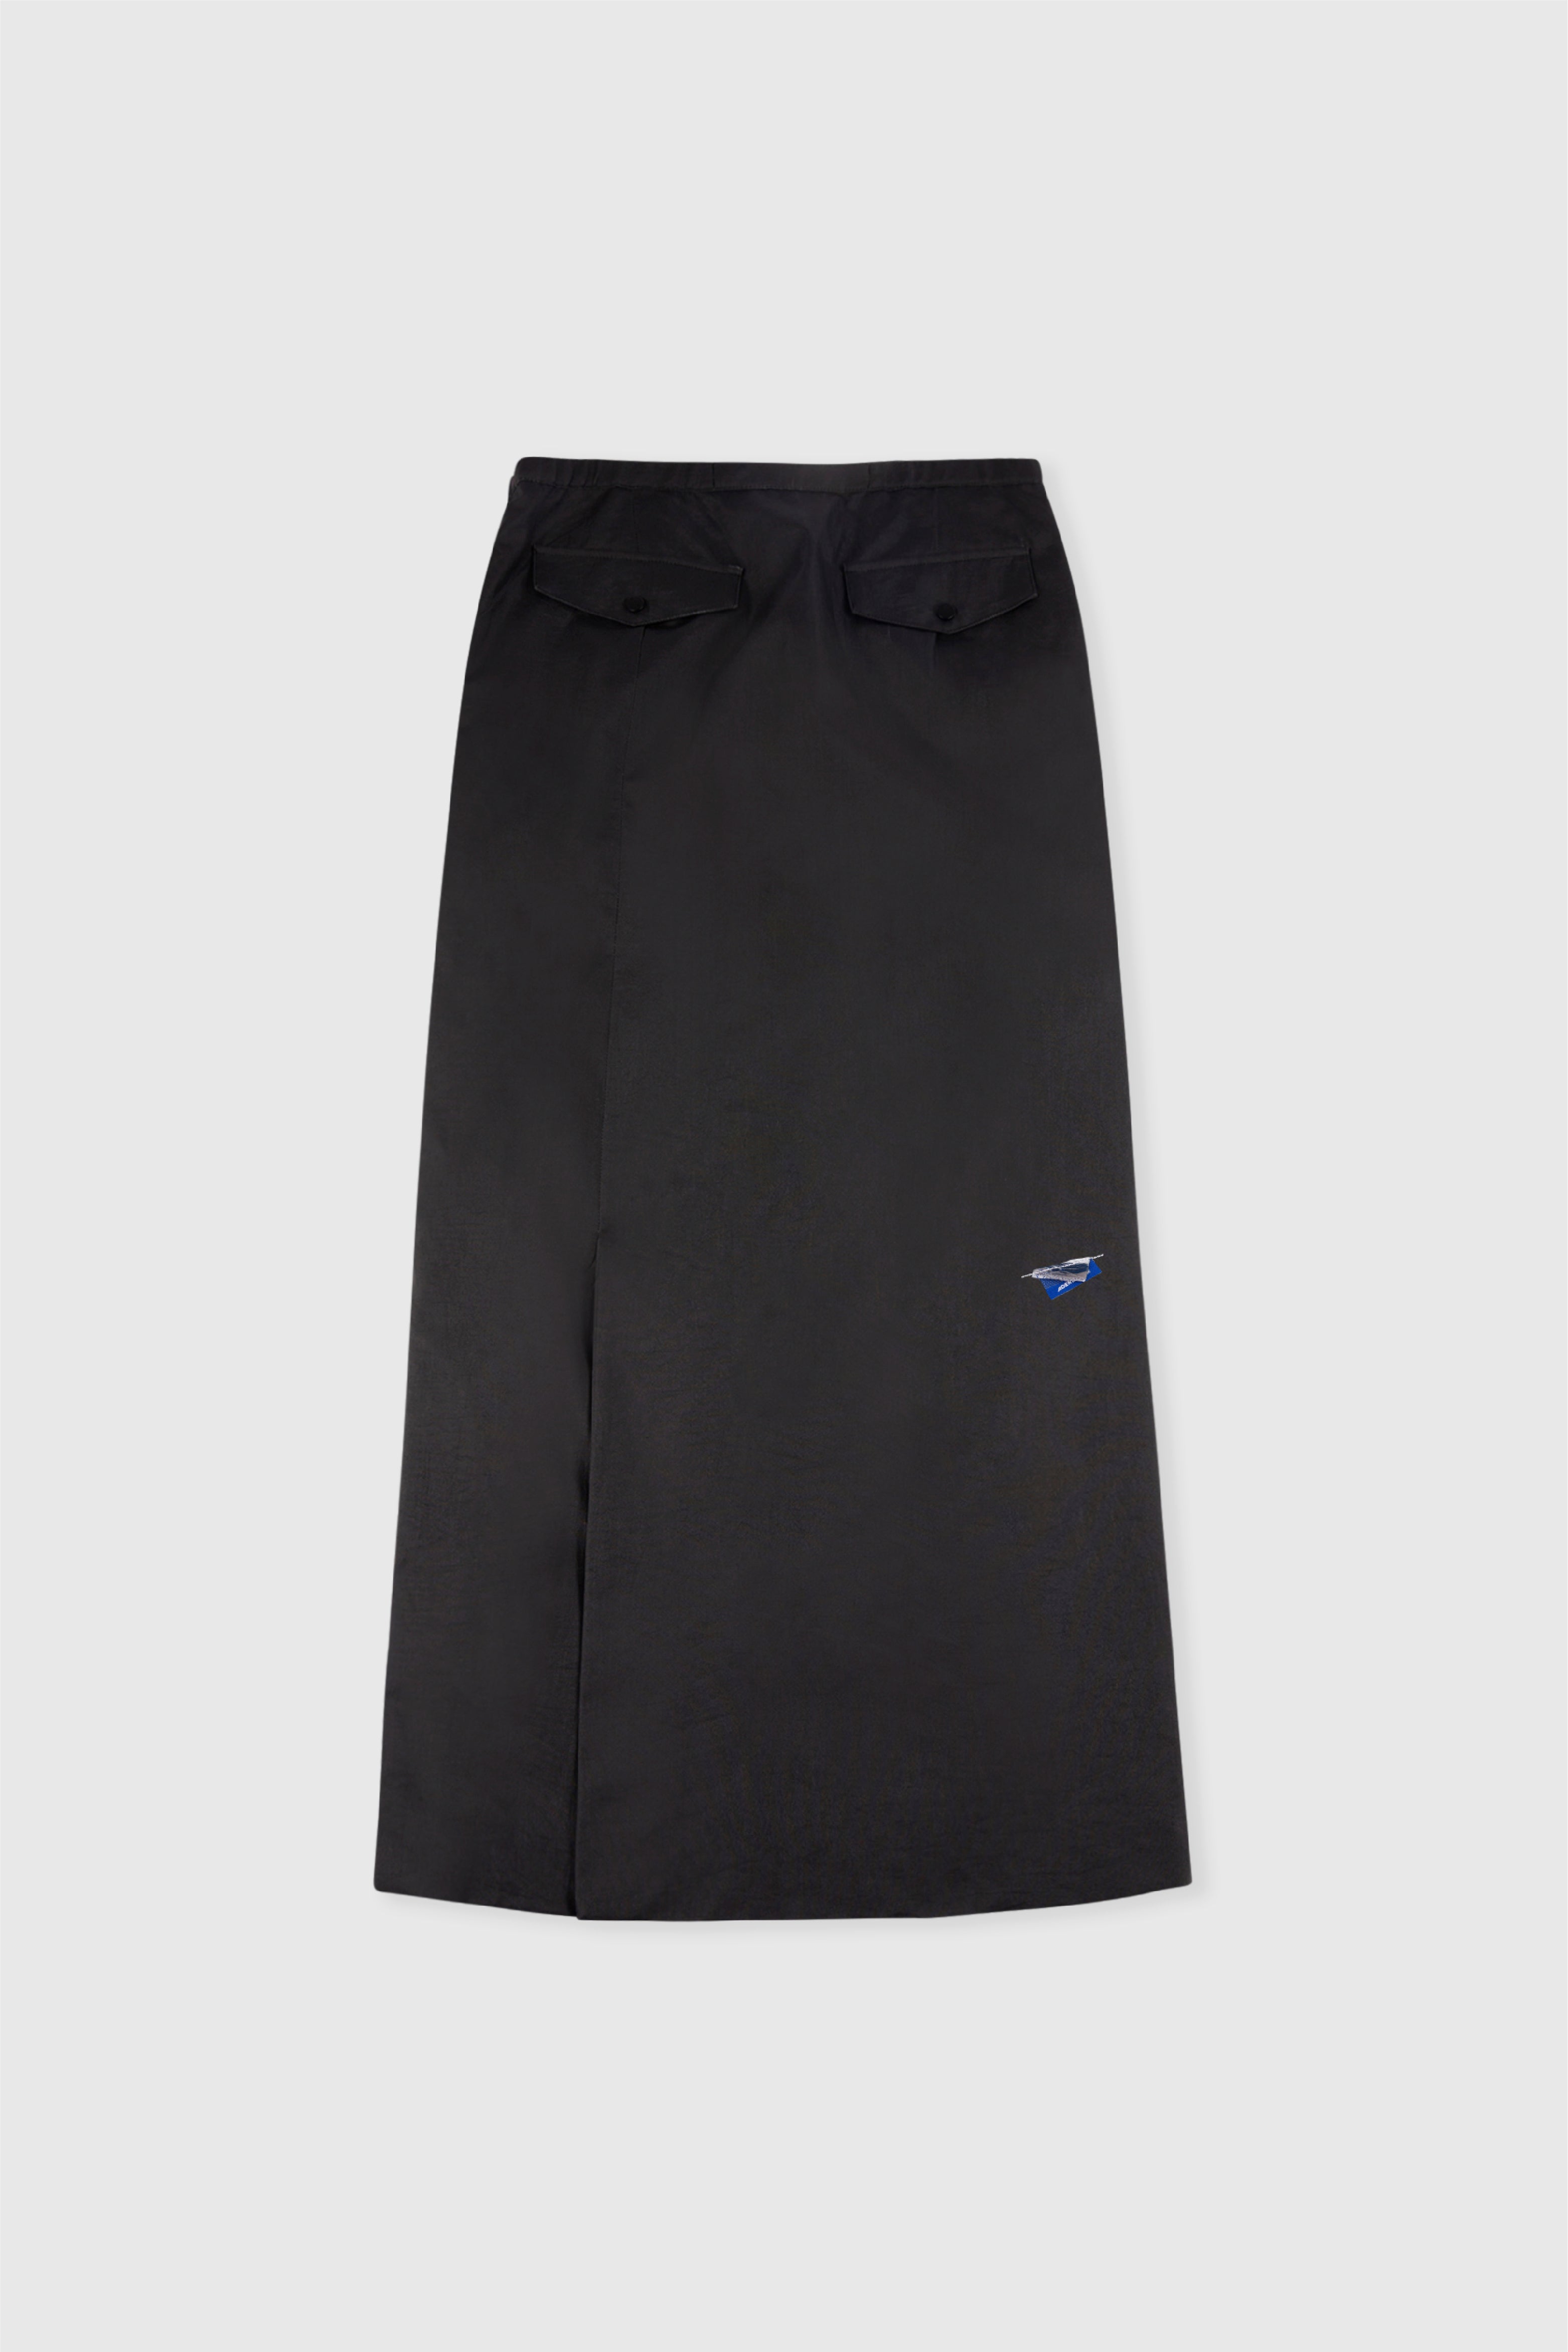 Selectshop FRAME - ADER ERROR Vesinet Long Skirt Bottoms Concept Store Dubai